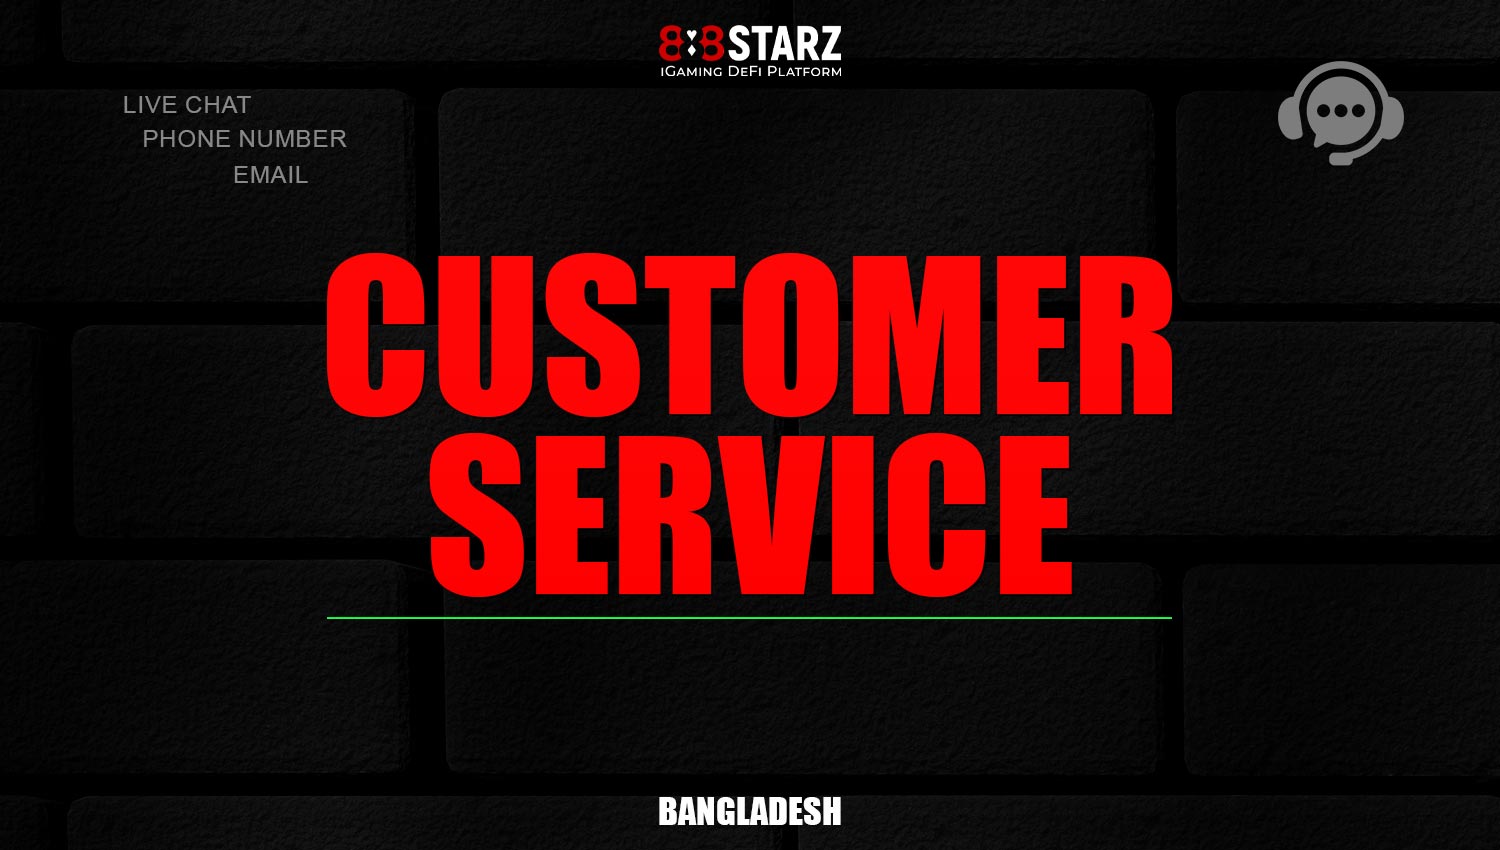 Contact methods for 888Starz Bangladesh customer support.